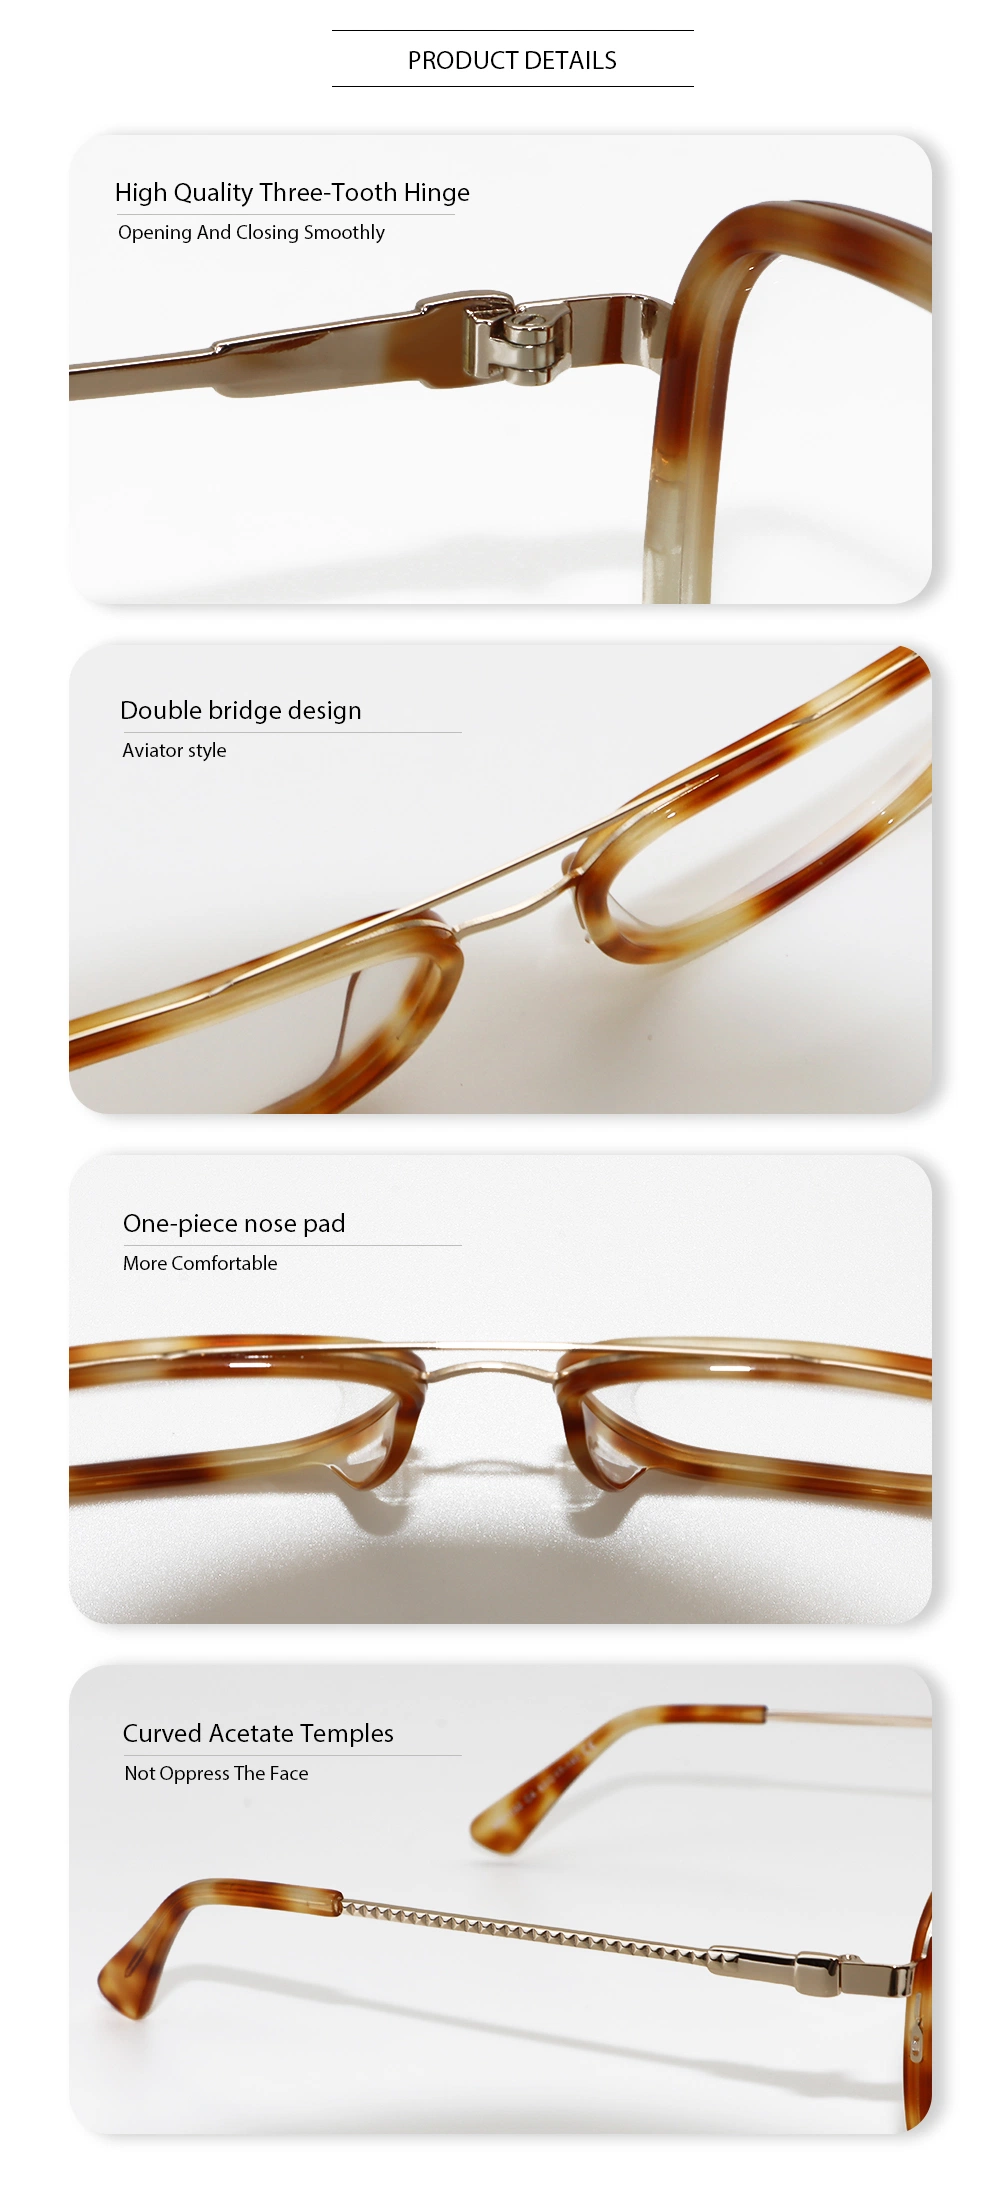 Yeetian Wholesale Chinese Double Bridge Captain Design Prescription Optical Glasses Metal Eyeglass Frames with Acetate for Men